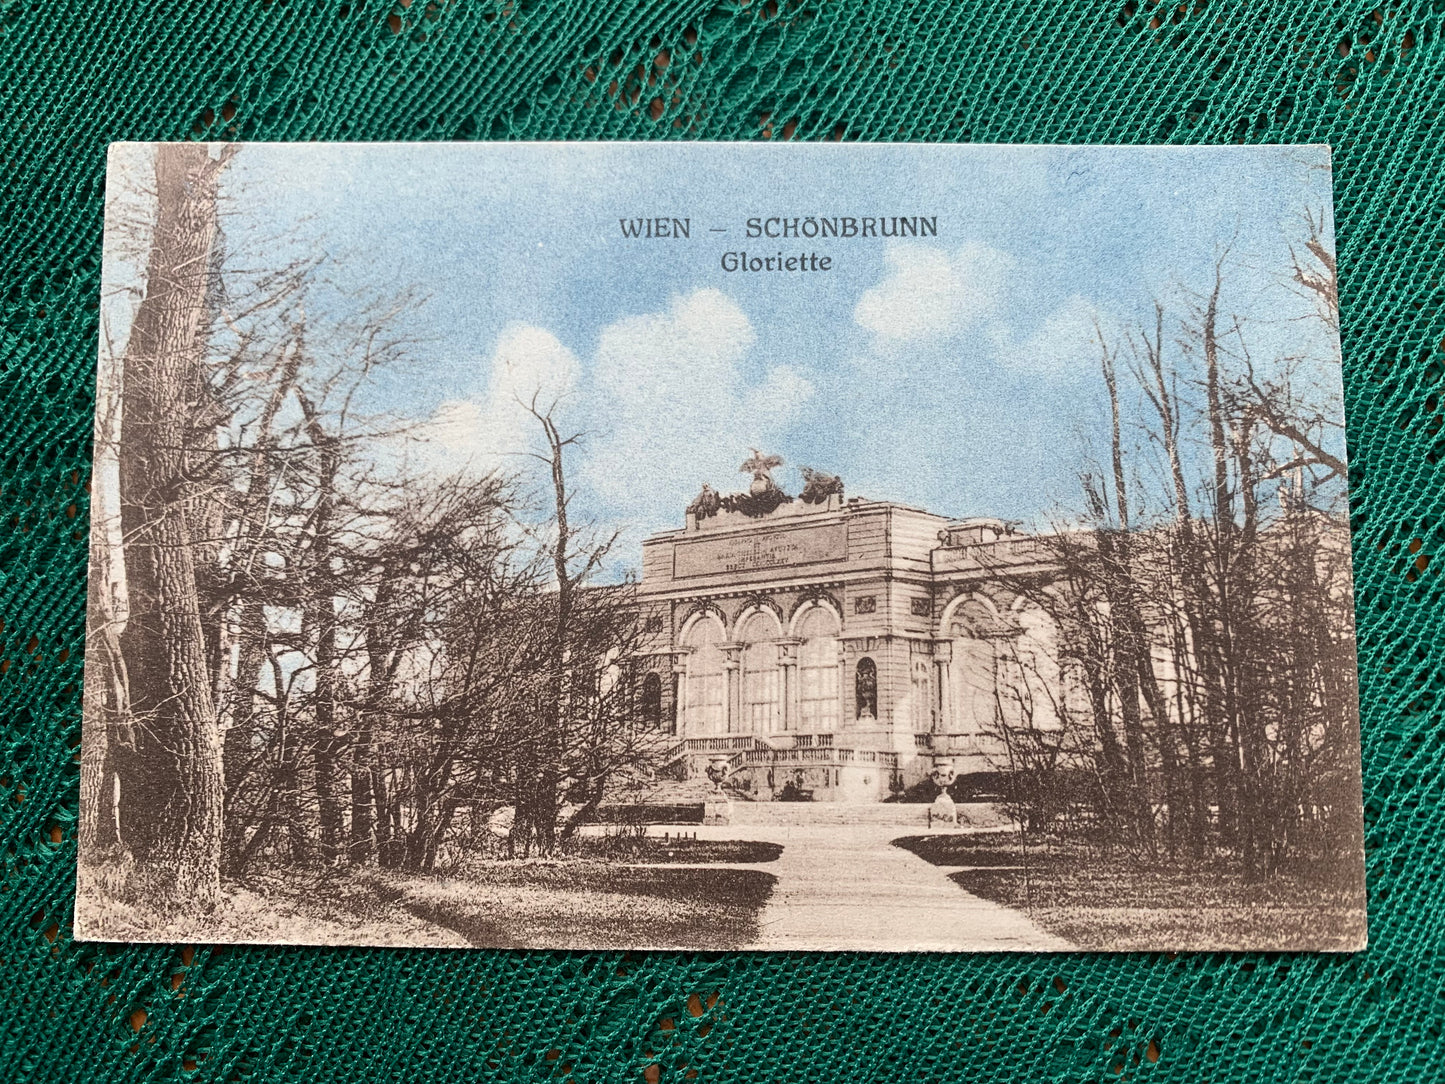 Old postcard - WIEN SCHÖNBRUNN - Gloriette - Austria - B. K. W. 1. 175 - early 1900's